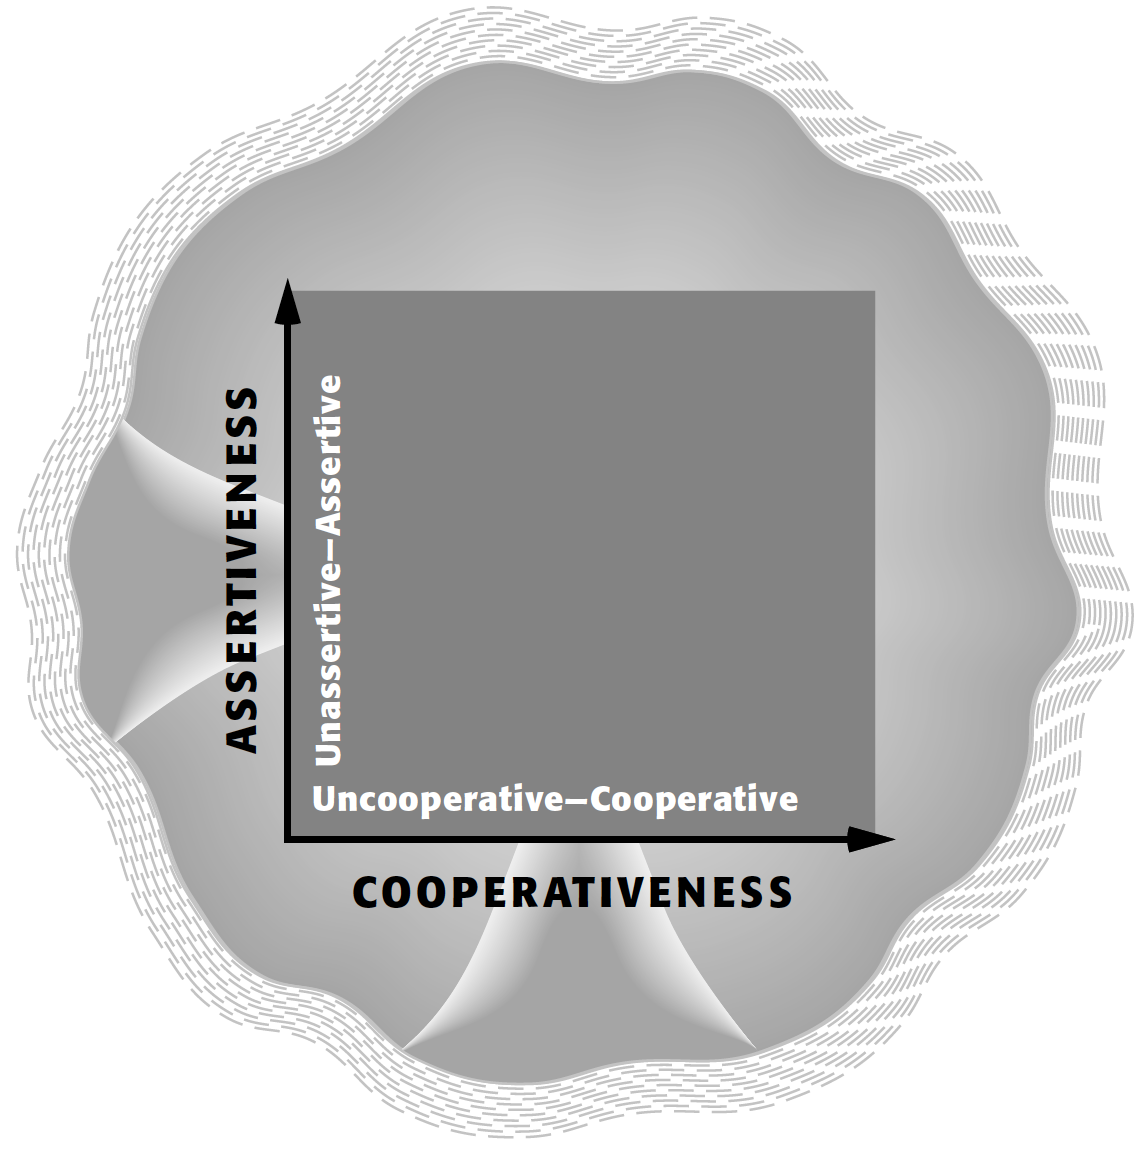 Assertiveness and Cooperativeness